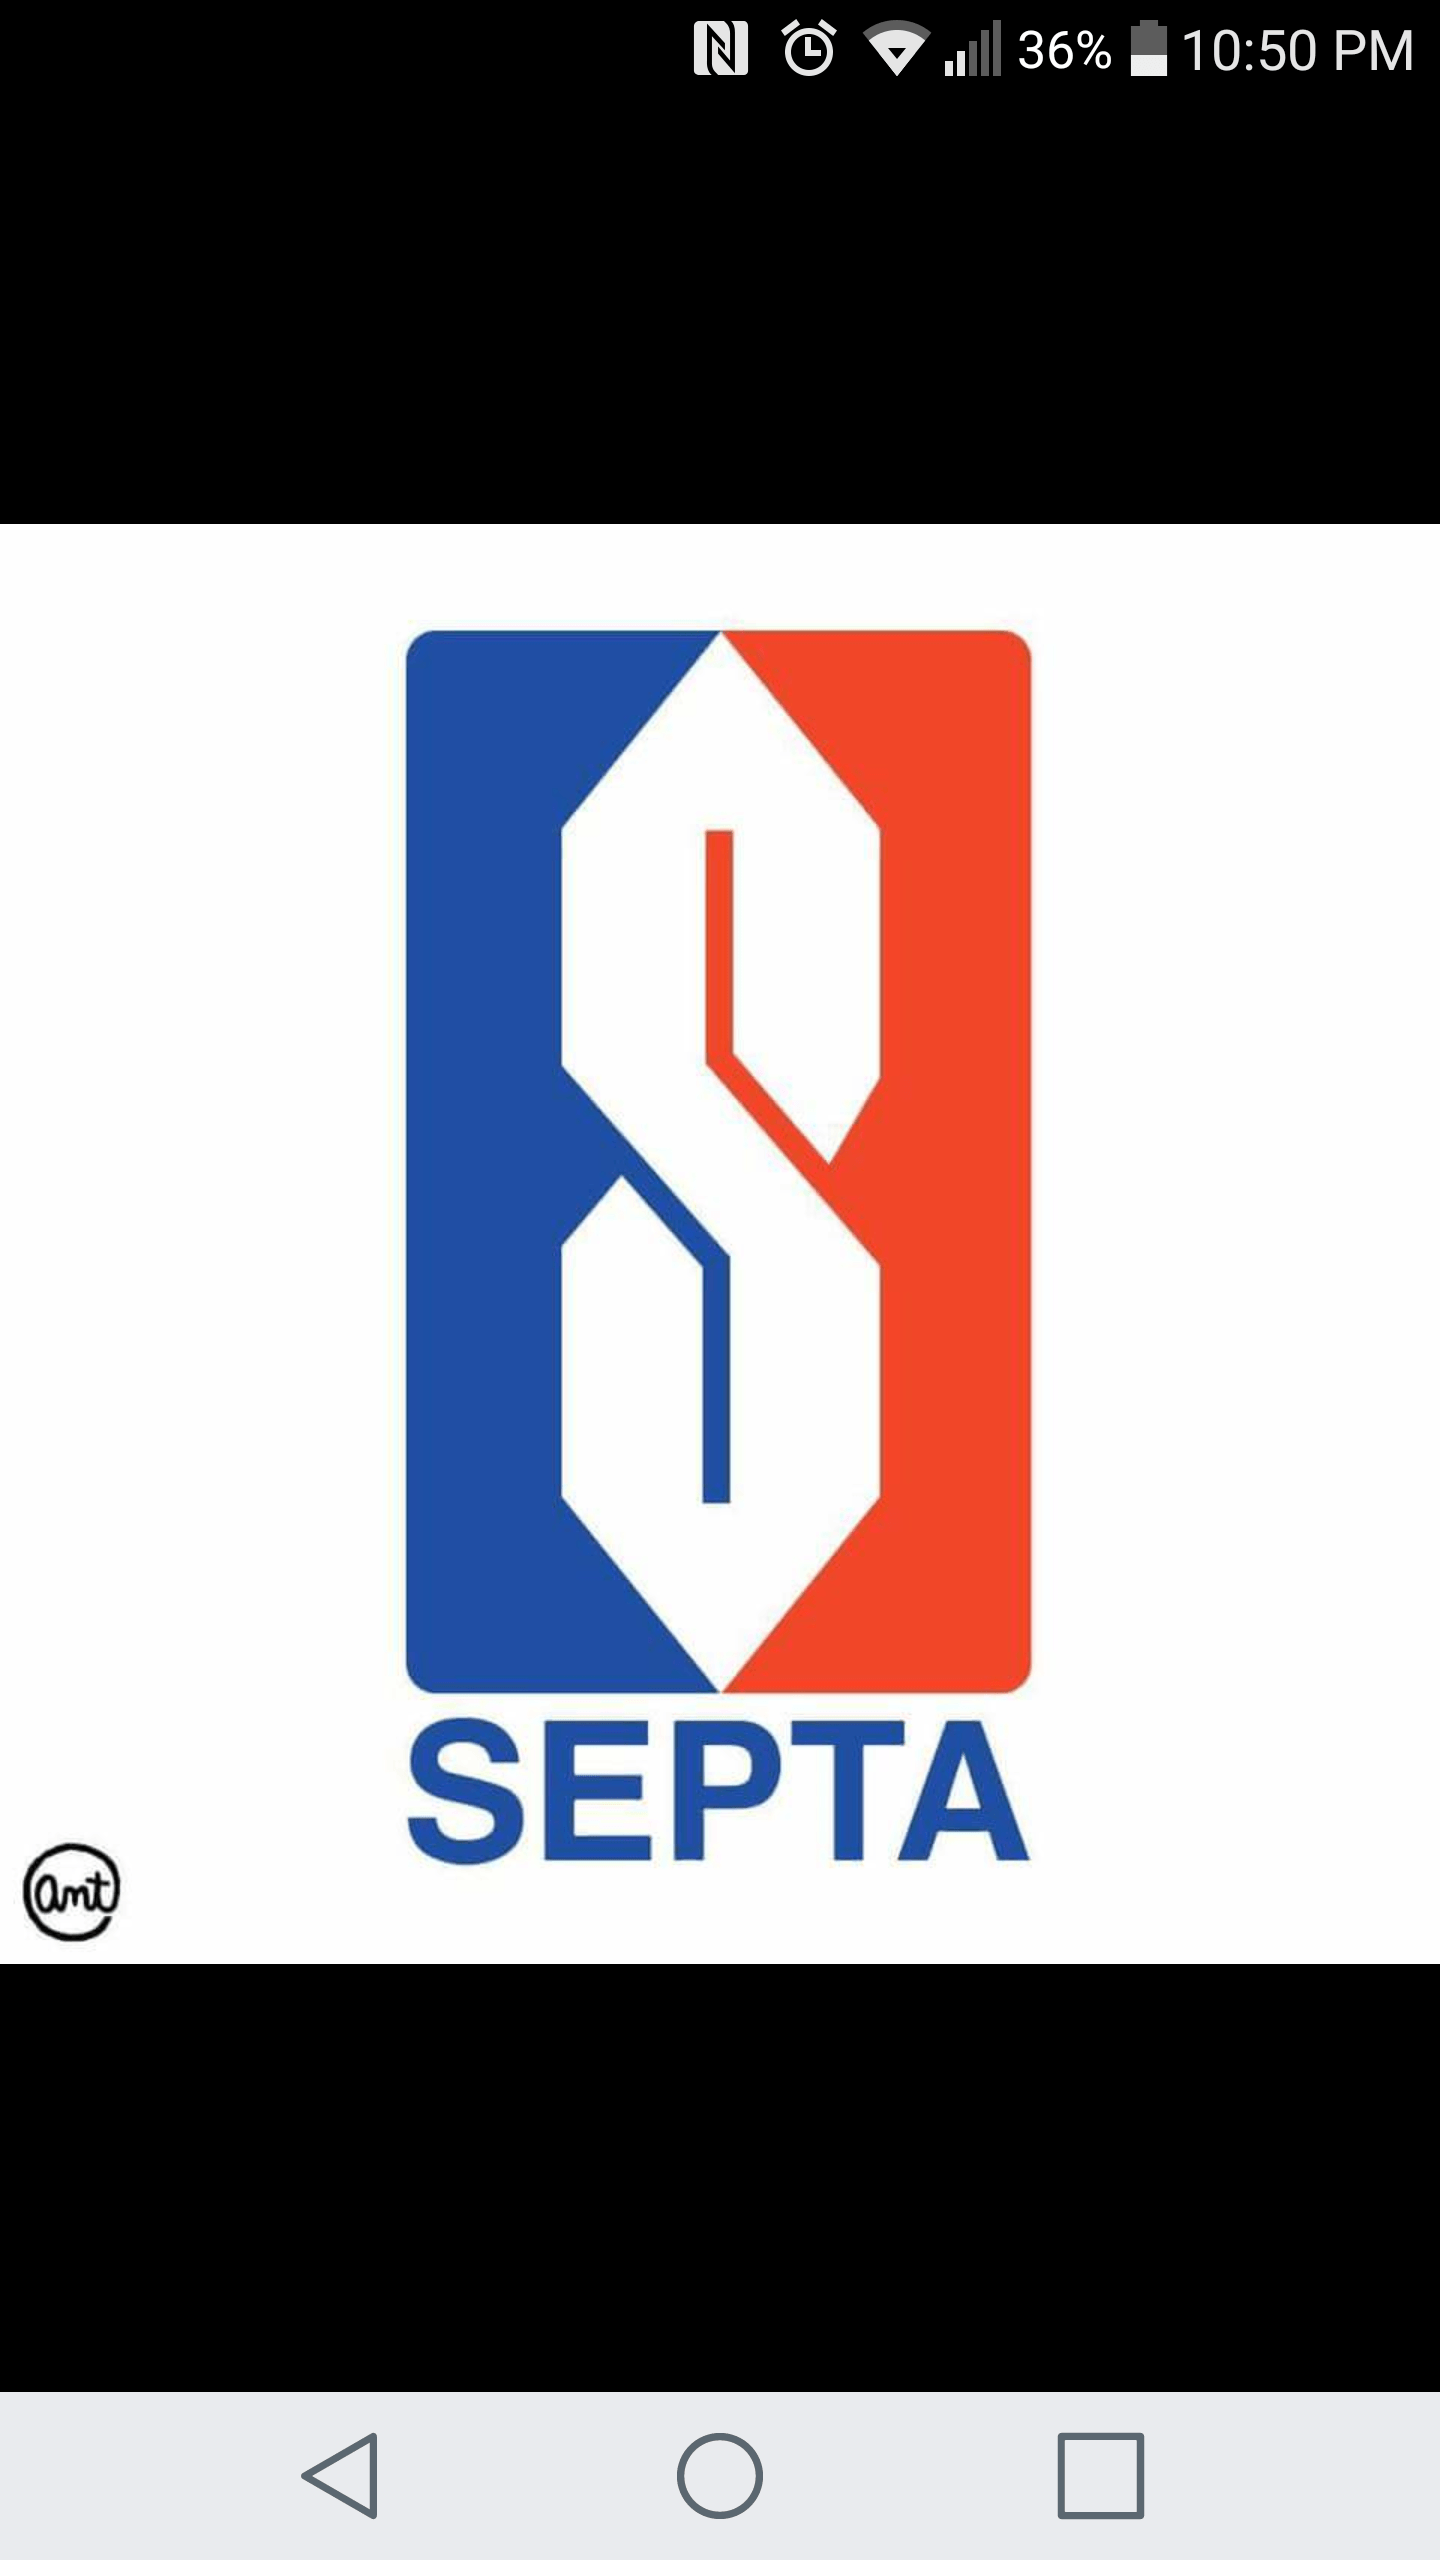 SEPTA Logo - New septa logo? - Album on Imgur